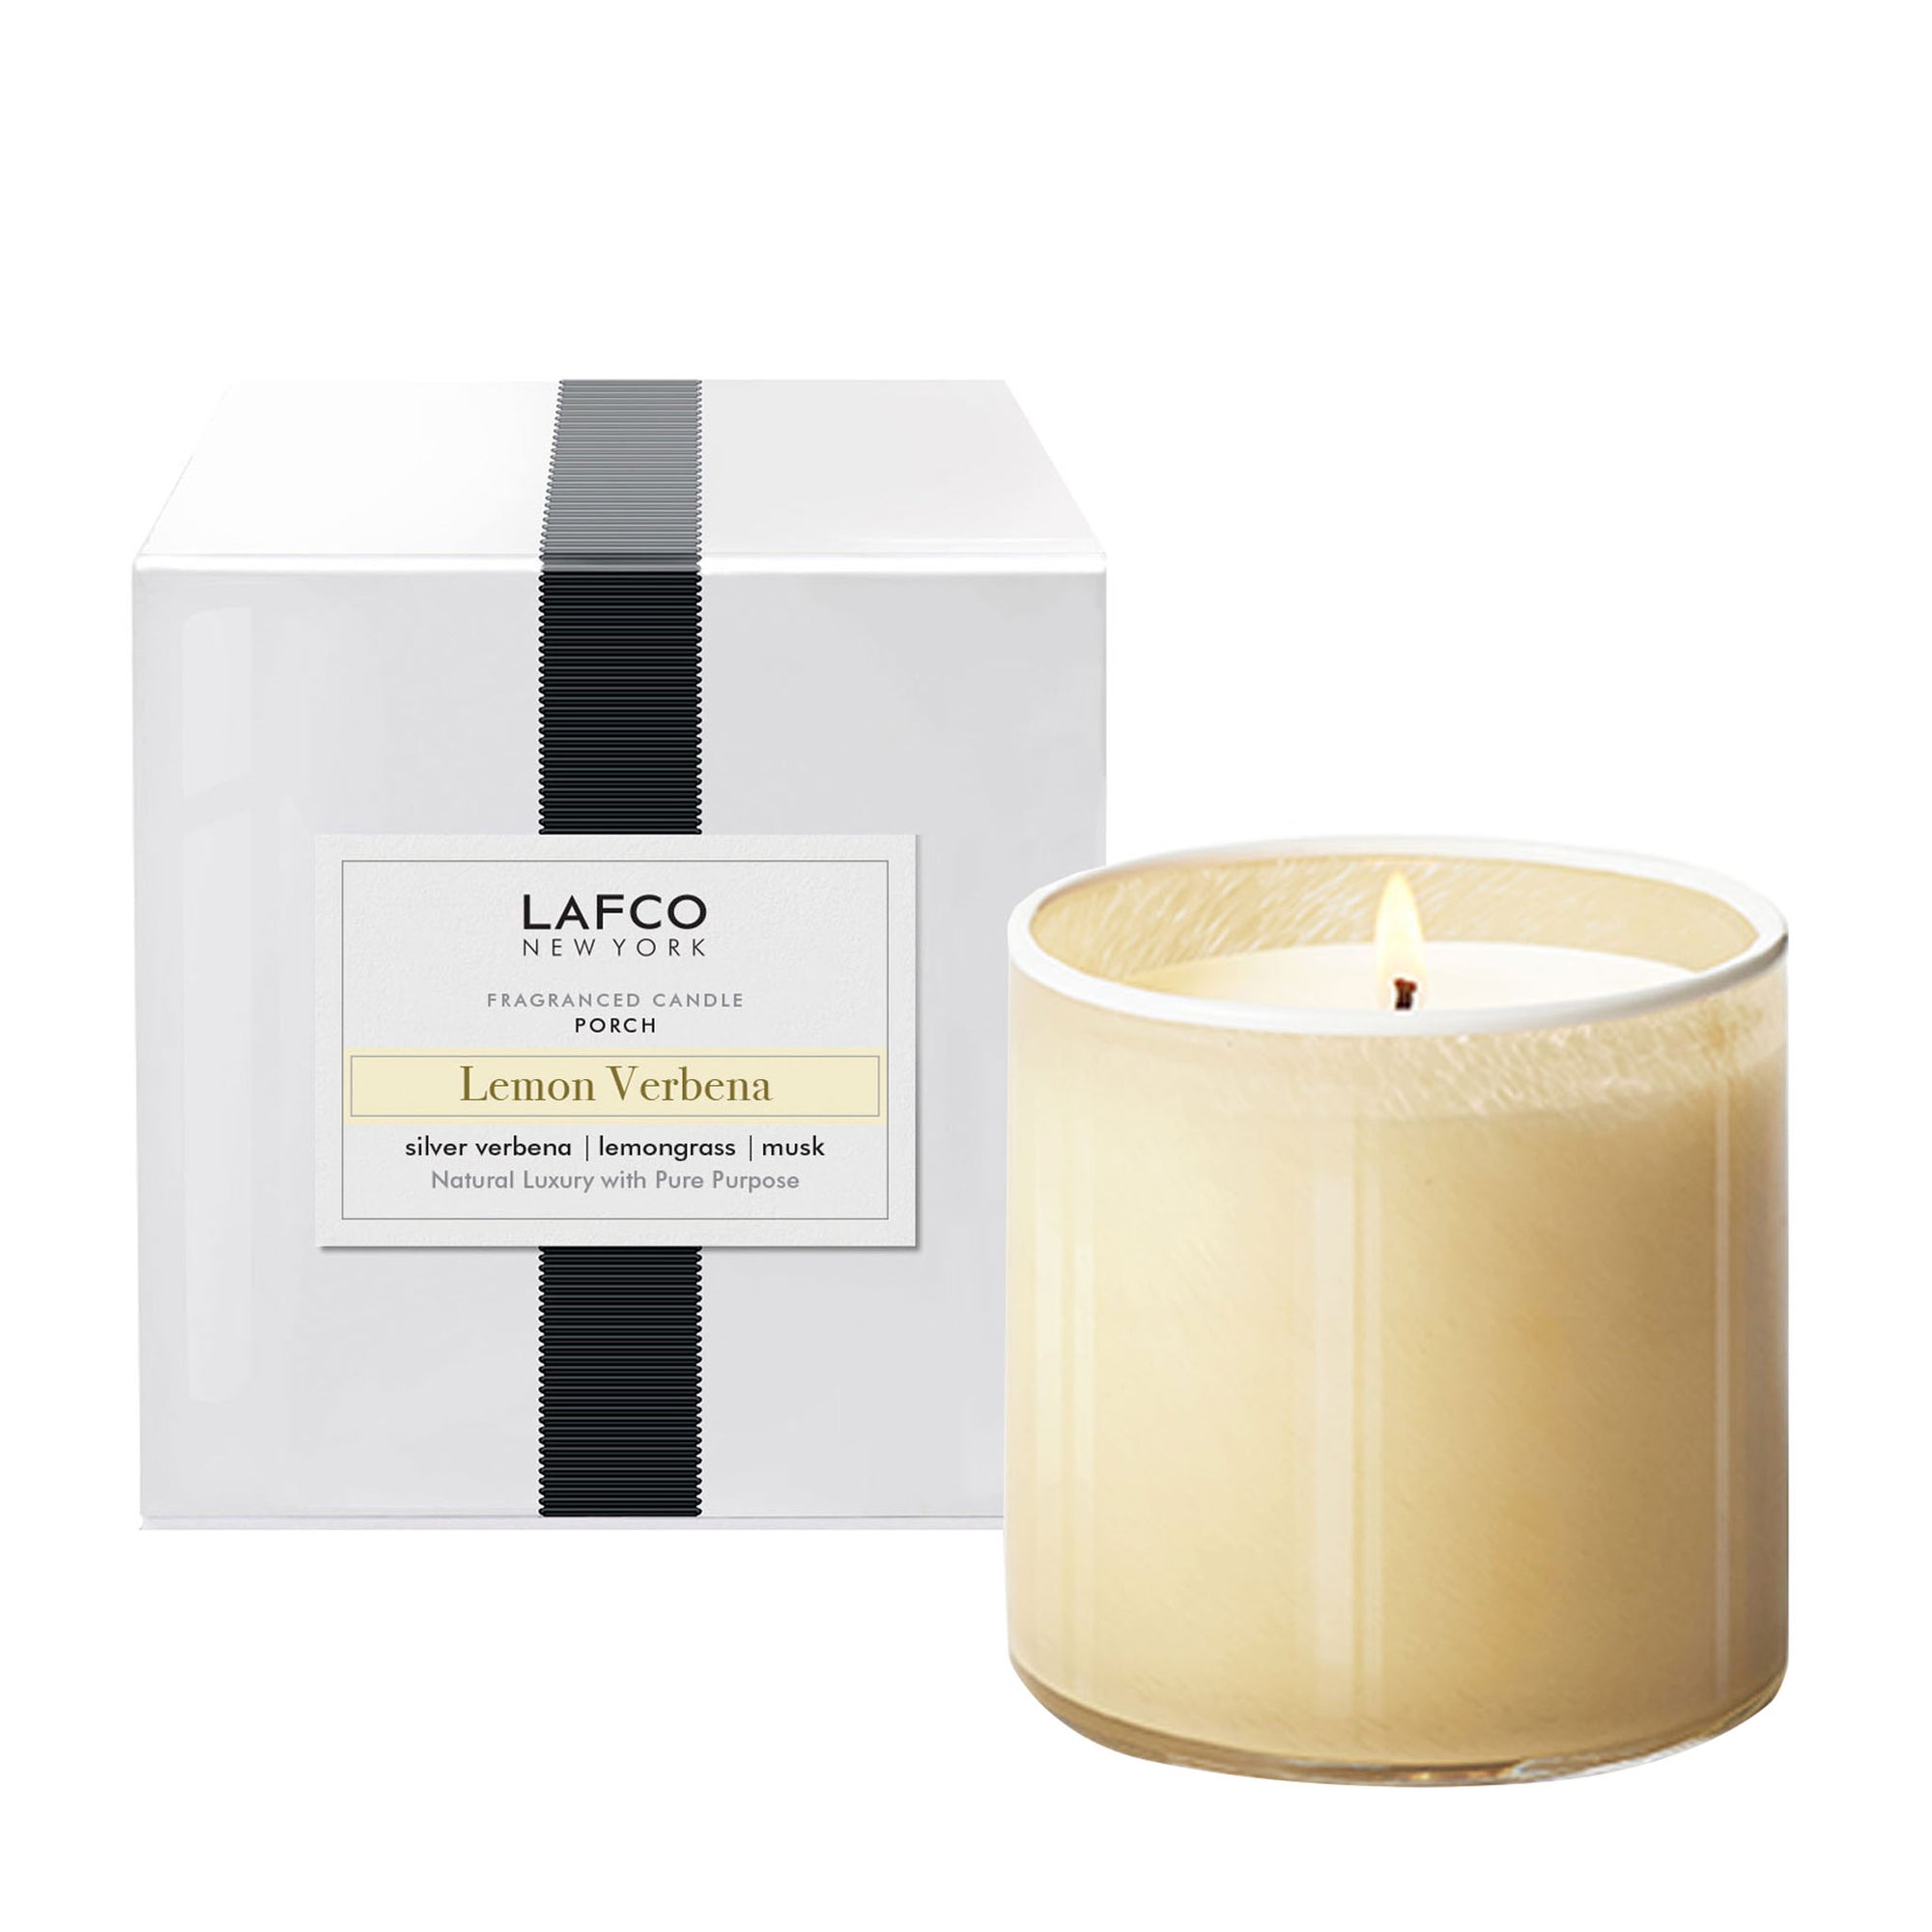 Lafco Porch | Lemon Verbena Candle